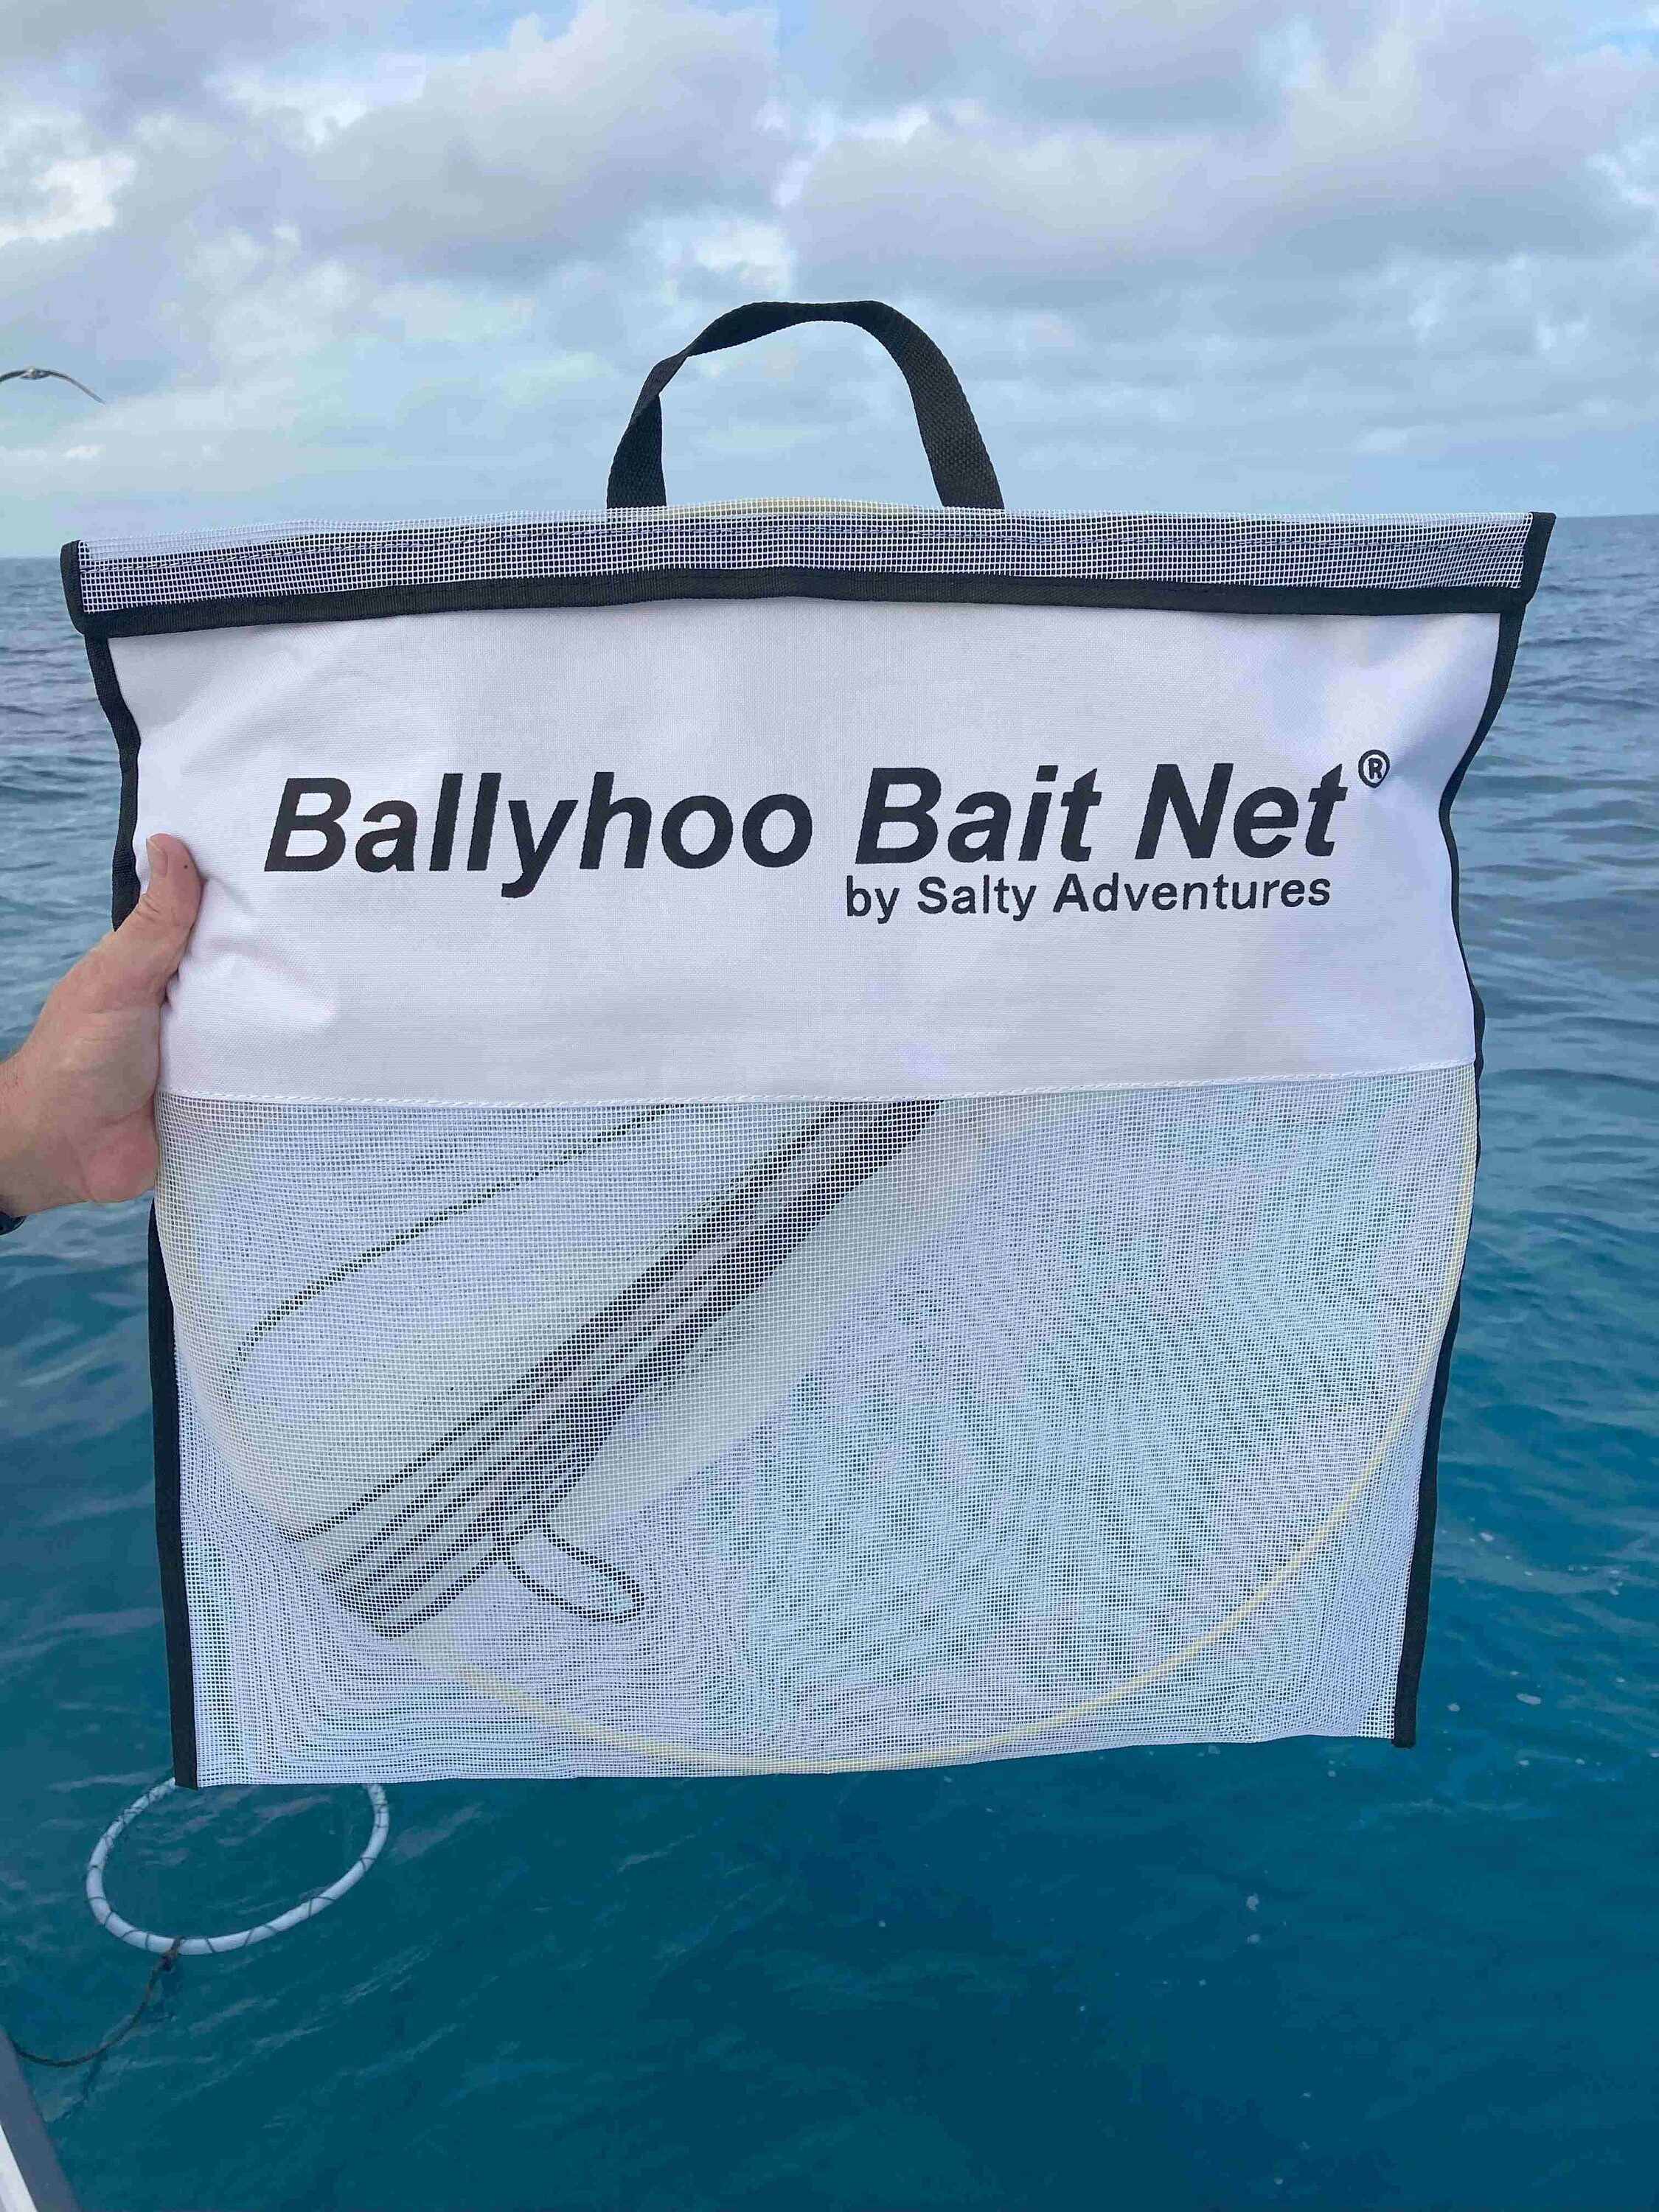 Ballyhoo Bait Net Collapsible Hoop Net Folds for Easy Storage